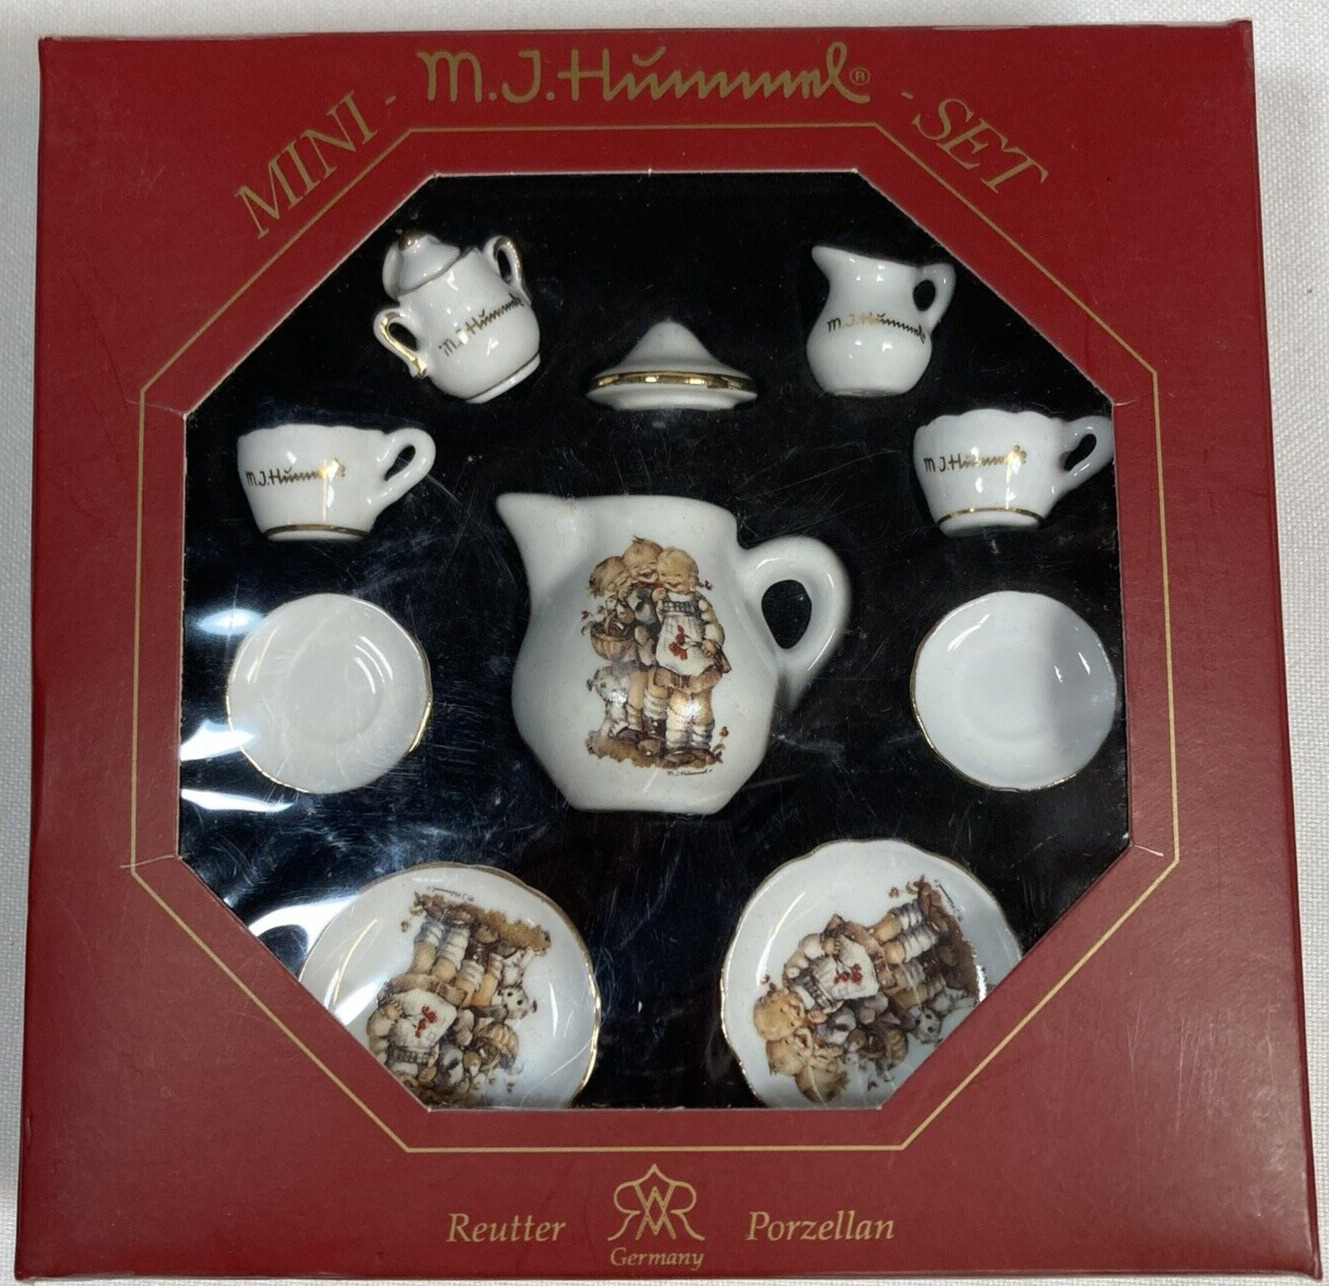 Reutter M.J. Hummel Miniature Dollhouse Porcelain Tea Set Made in Germany